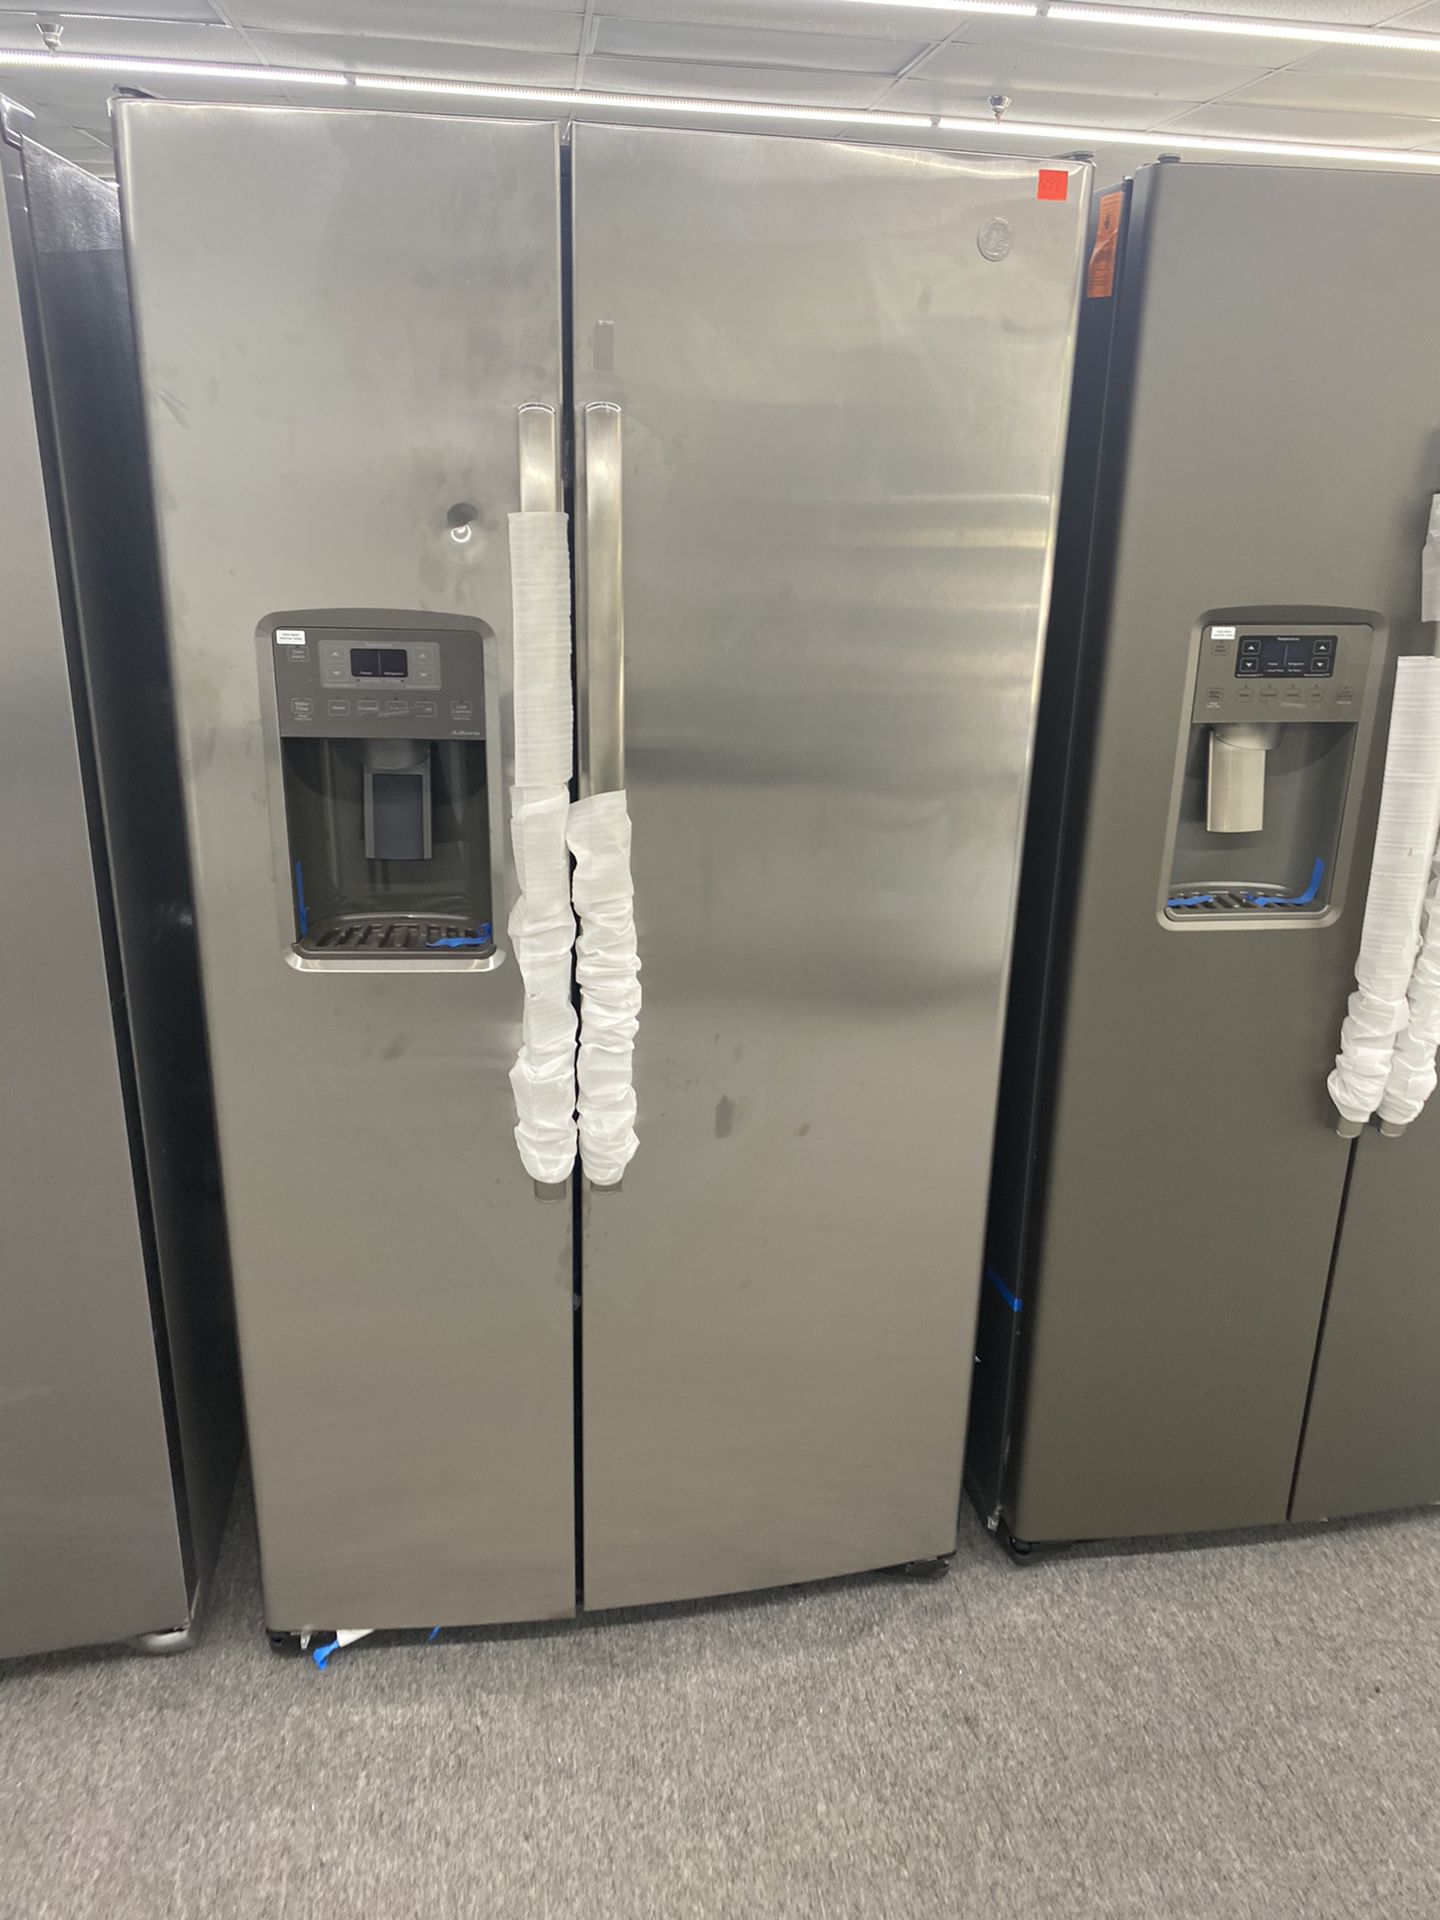 GE Refrigerator with one year warranty